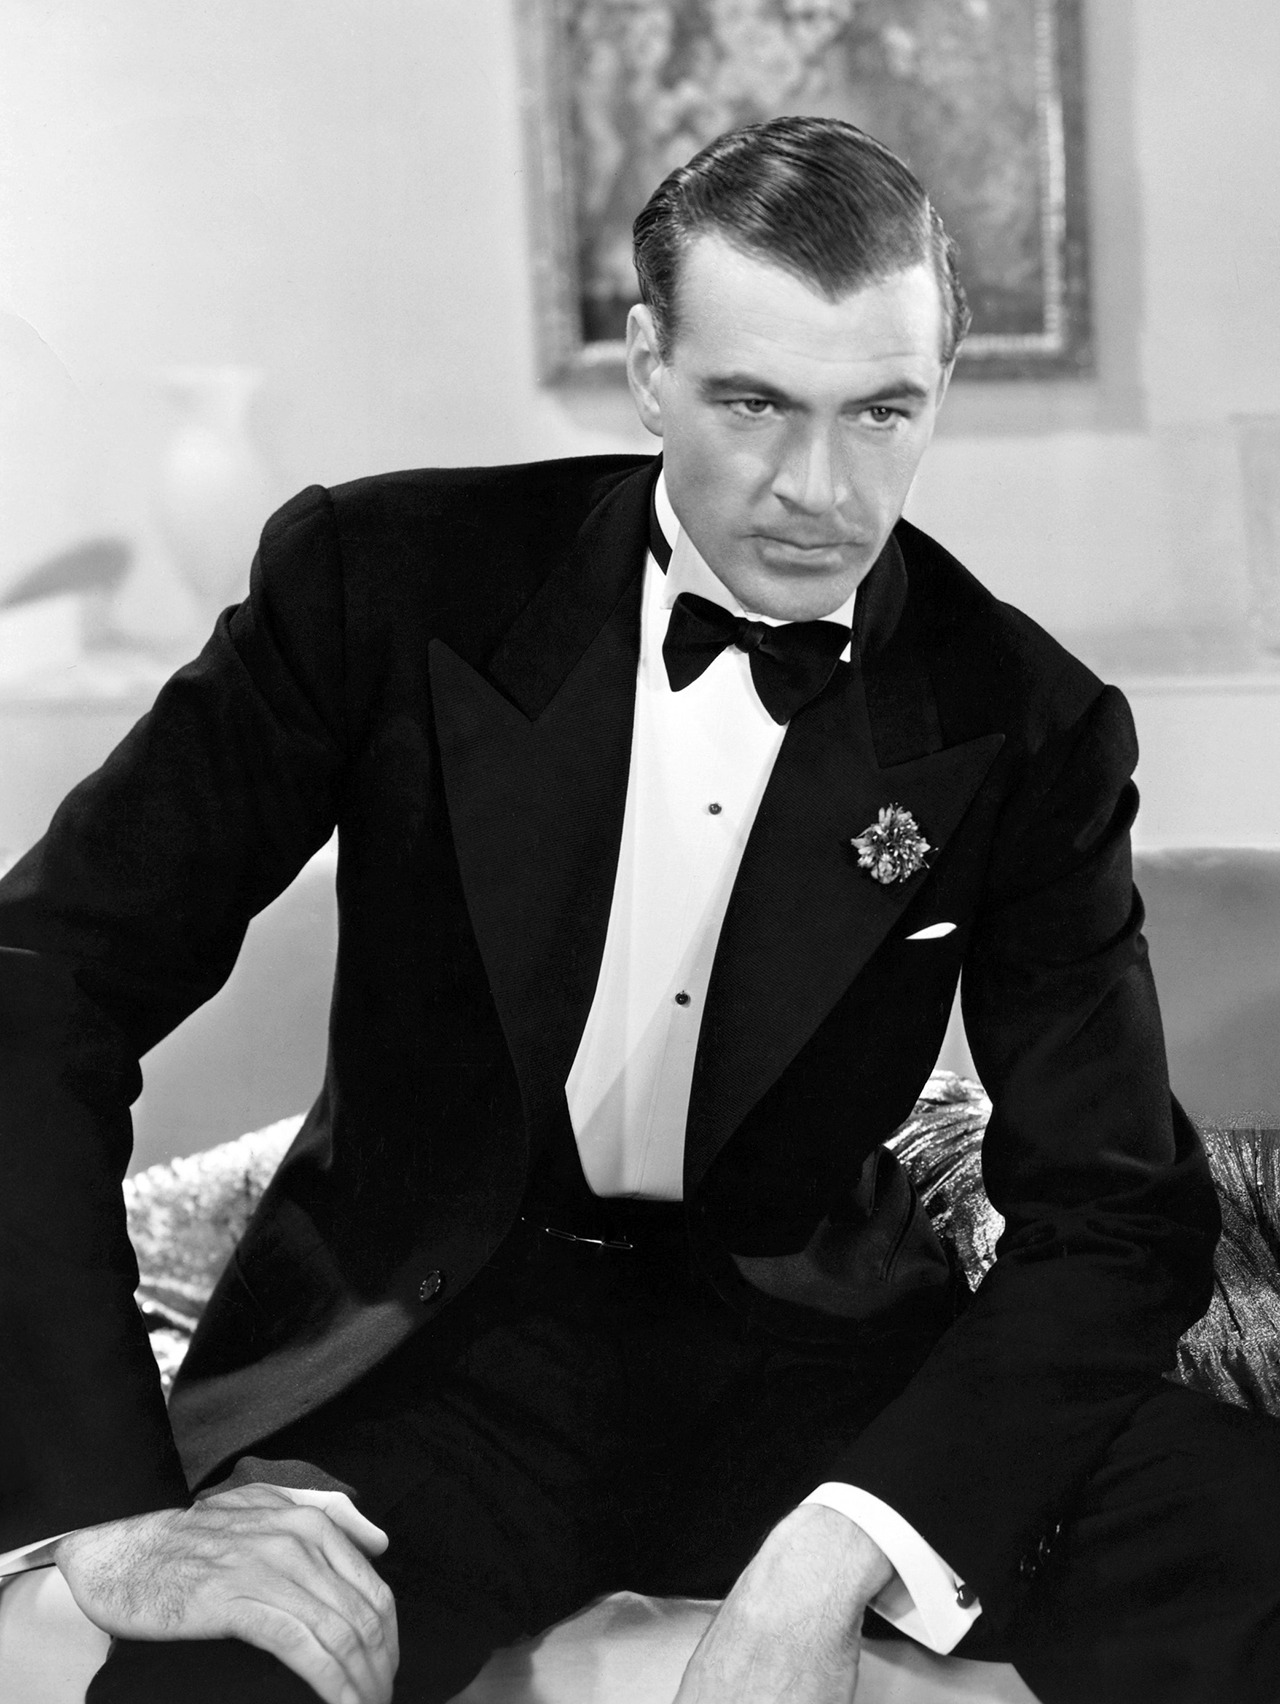 The Glory Years Of American Black Tie.
Gary Cooper, 1938.